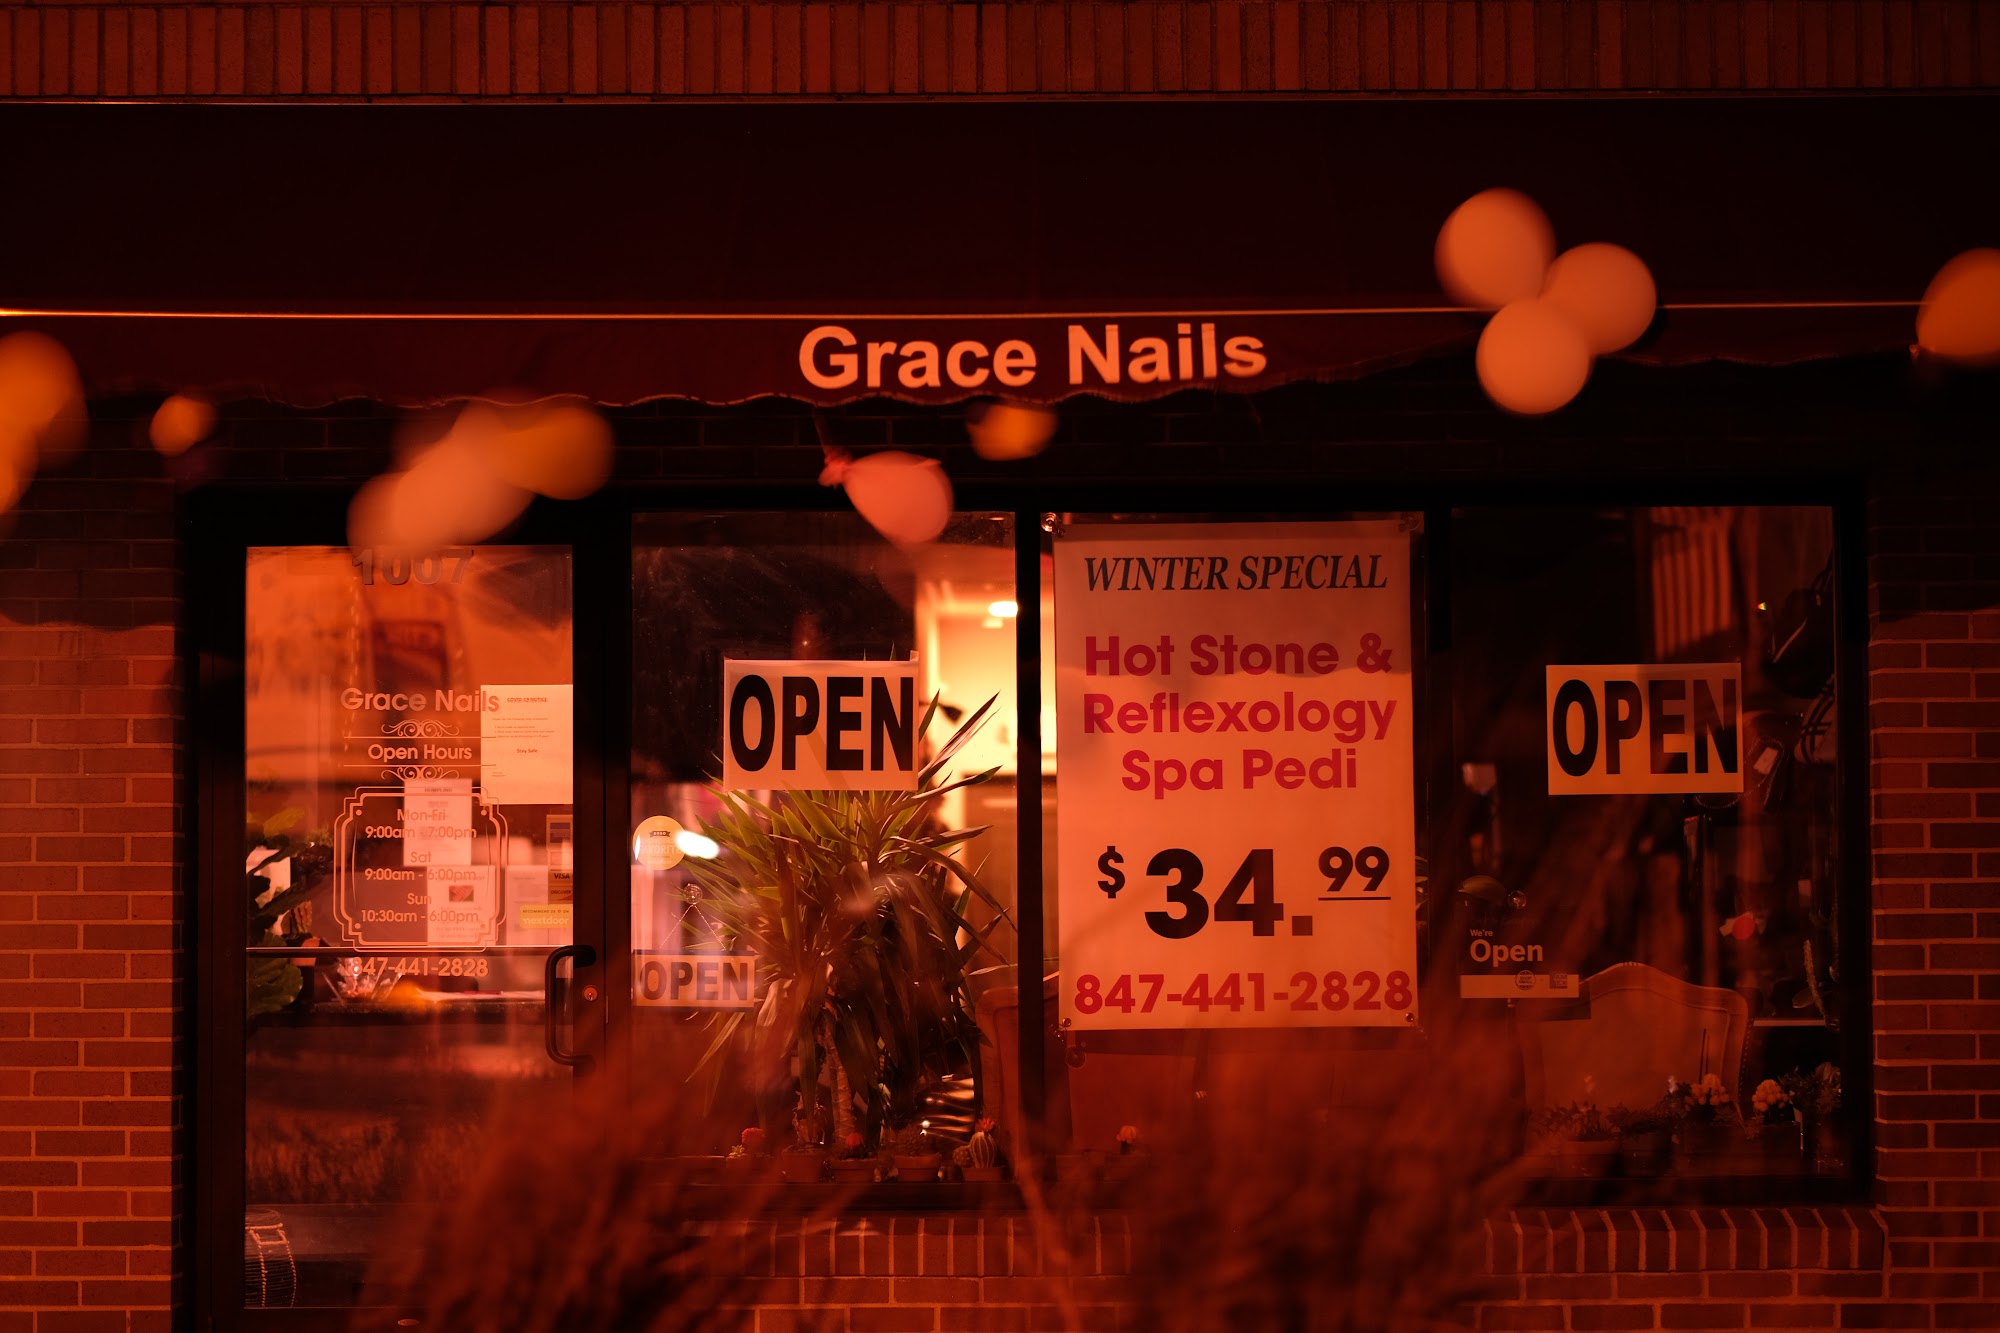 Grace Nails 1007 Green Bay Rd, Winnetka Illinois 60093